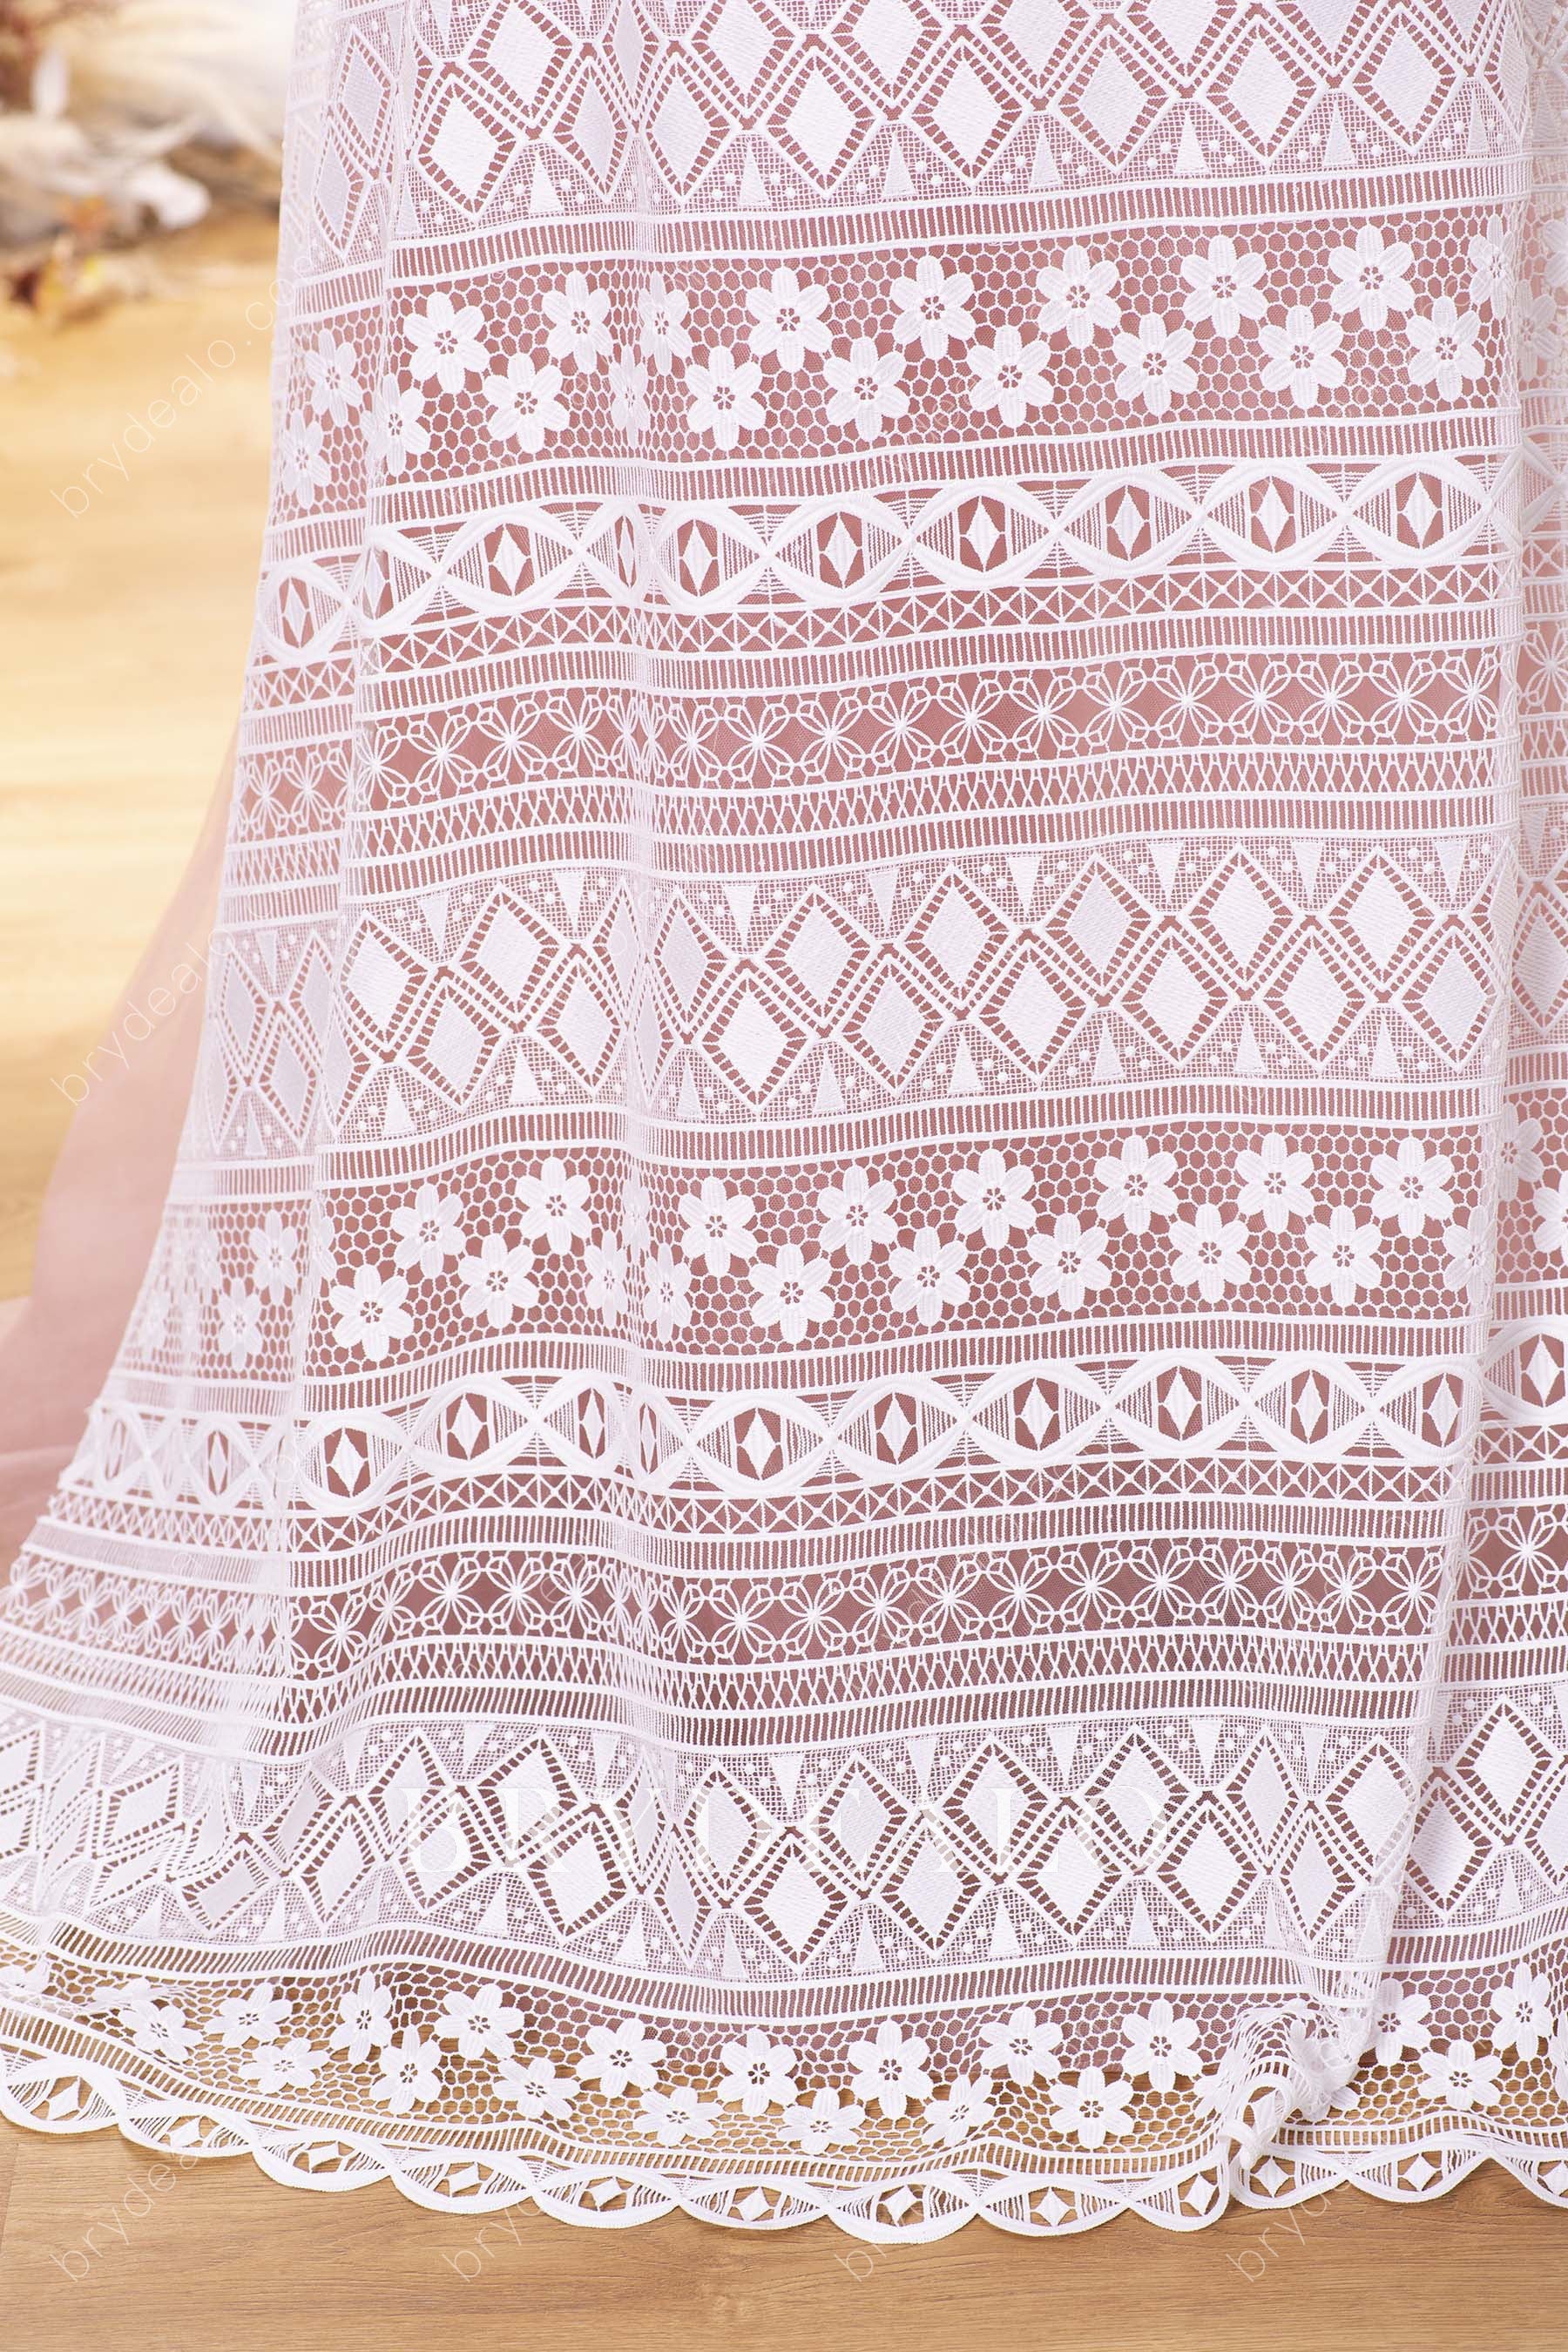  Crochet Lace Fabric